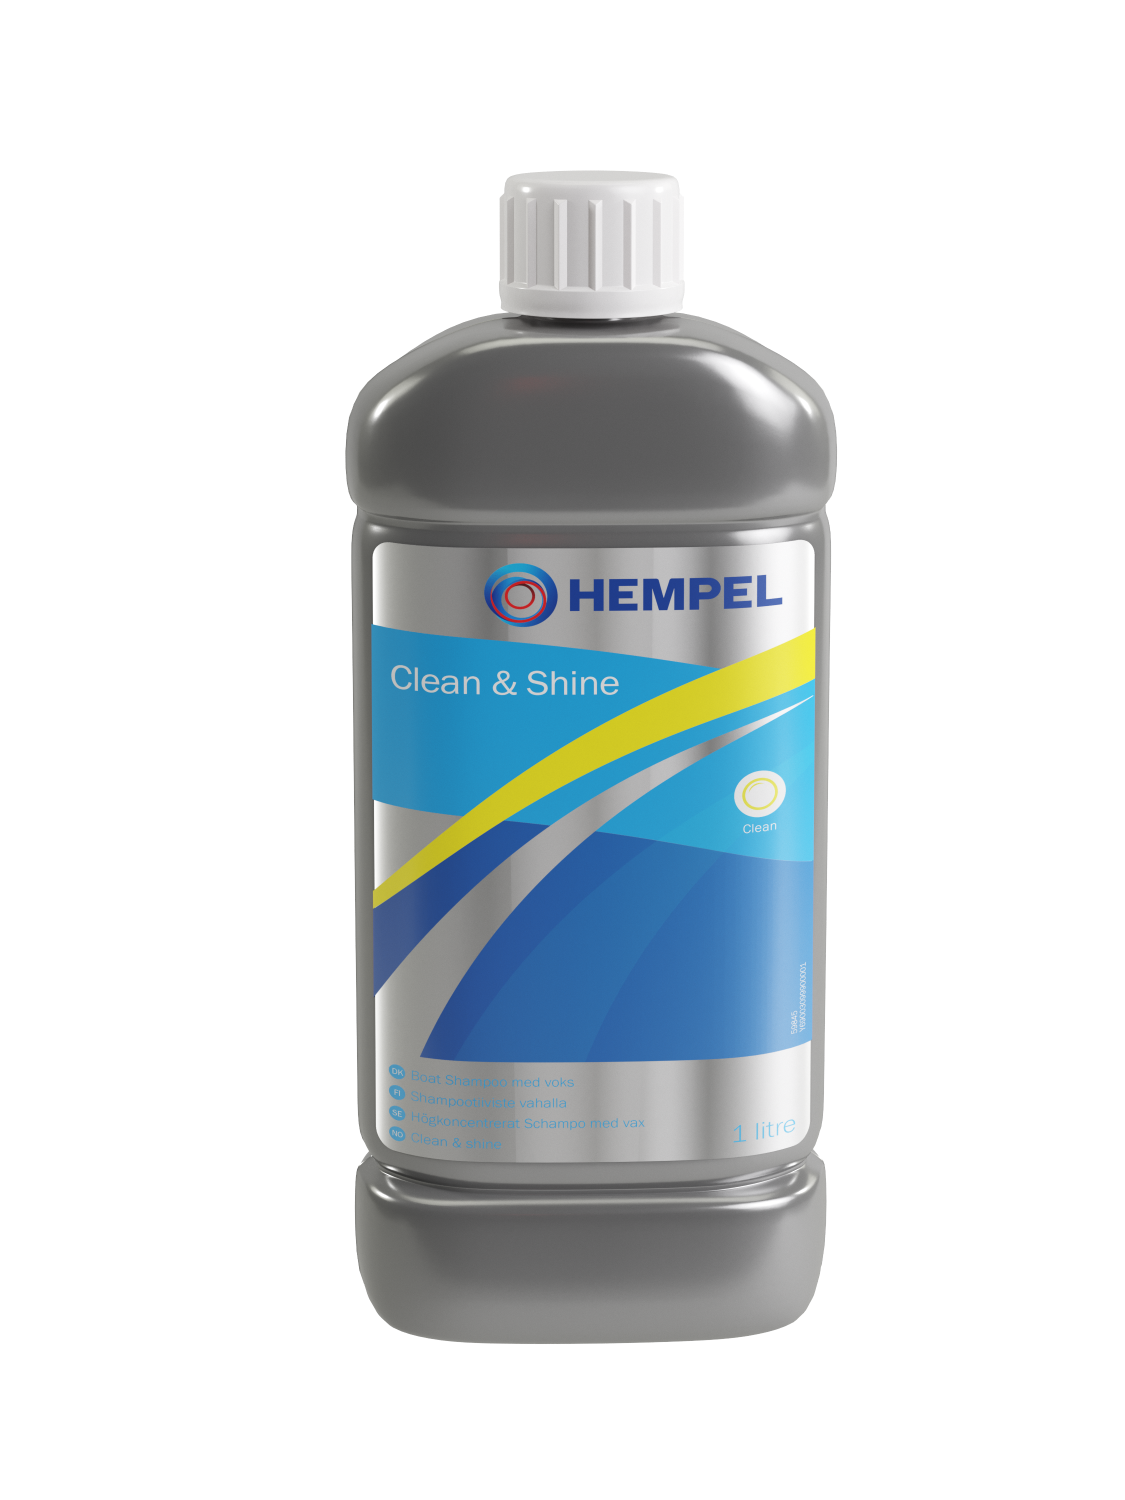 Hempel Clean & Shine 1 liter